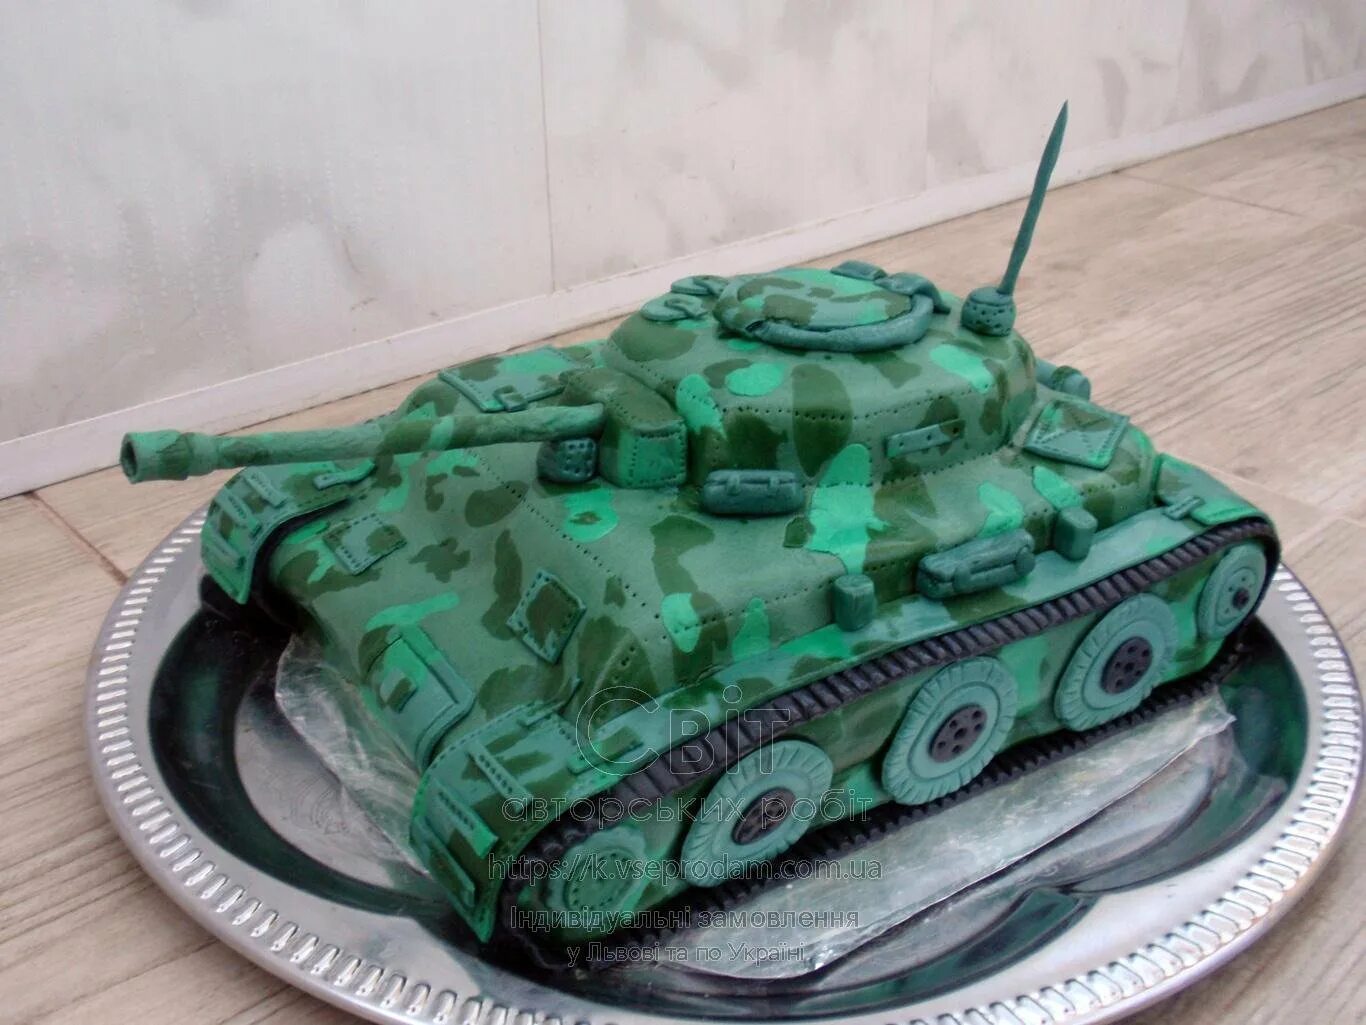 Торт в виде танков. Торт танк кв 44. Торт танки кв 44. Торт танк кв 2. Торт в виде танка.